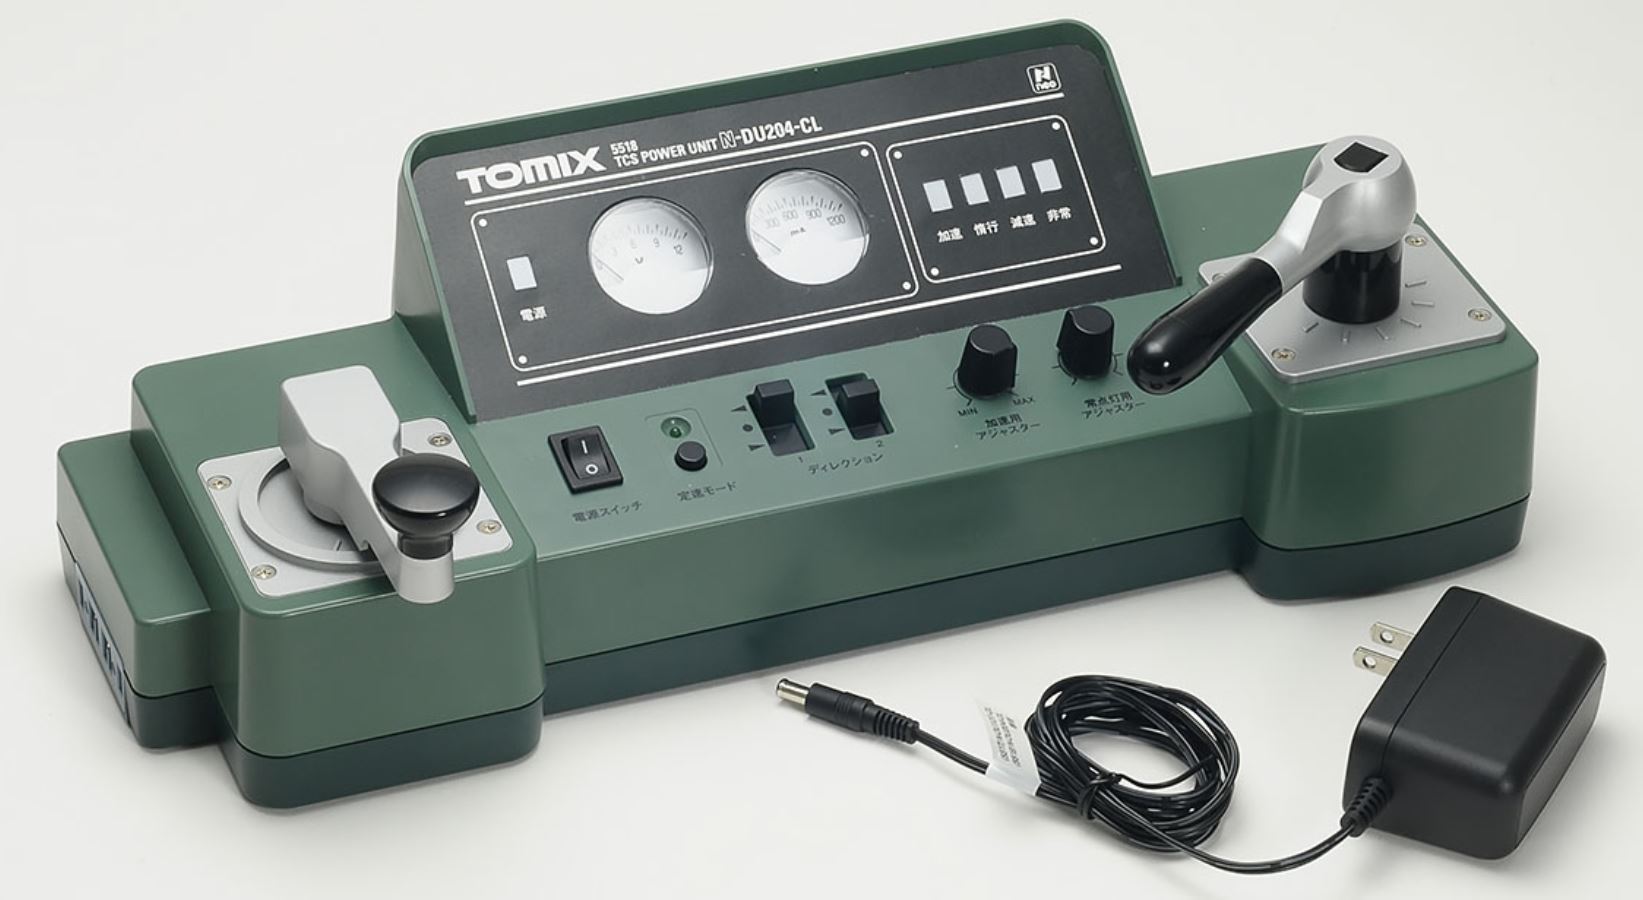 Tomix 05 5518 PU-N-DU204 Controller